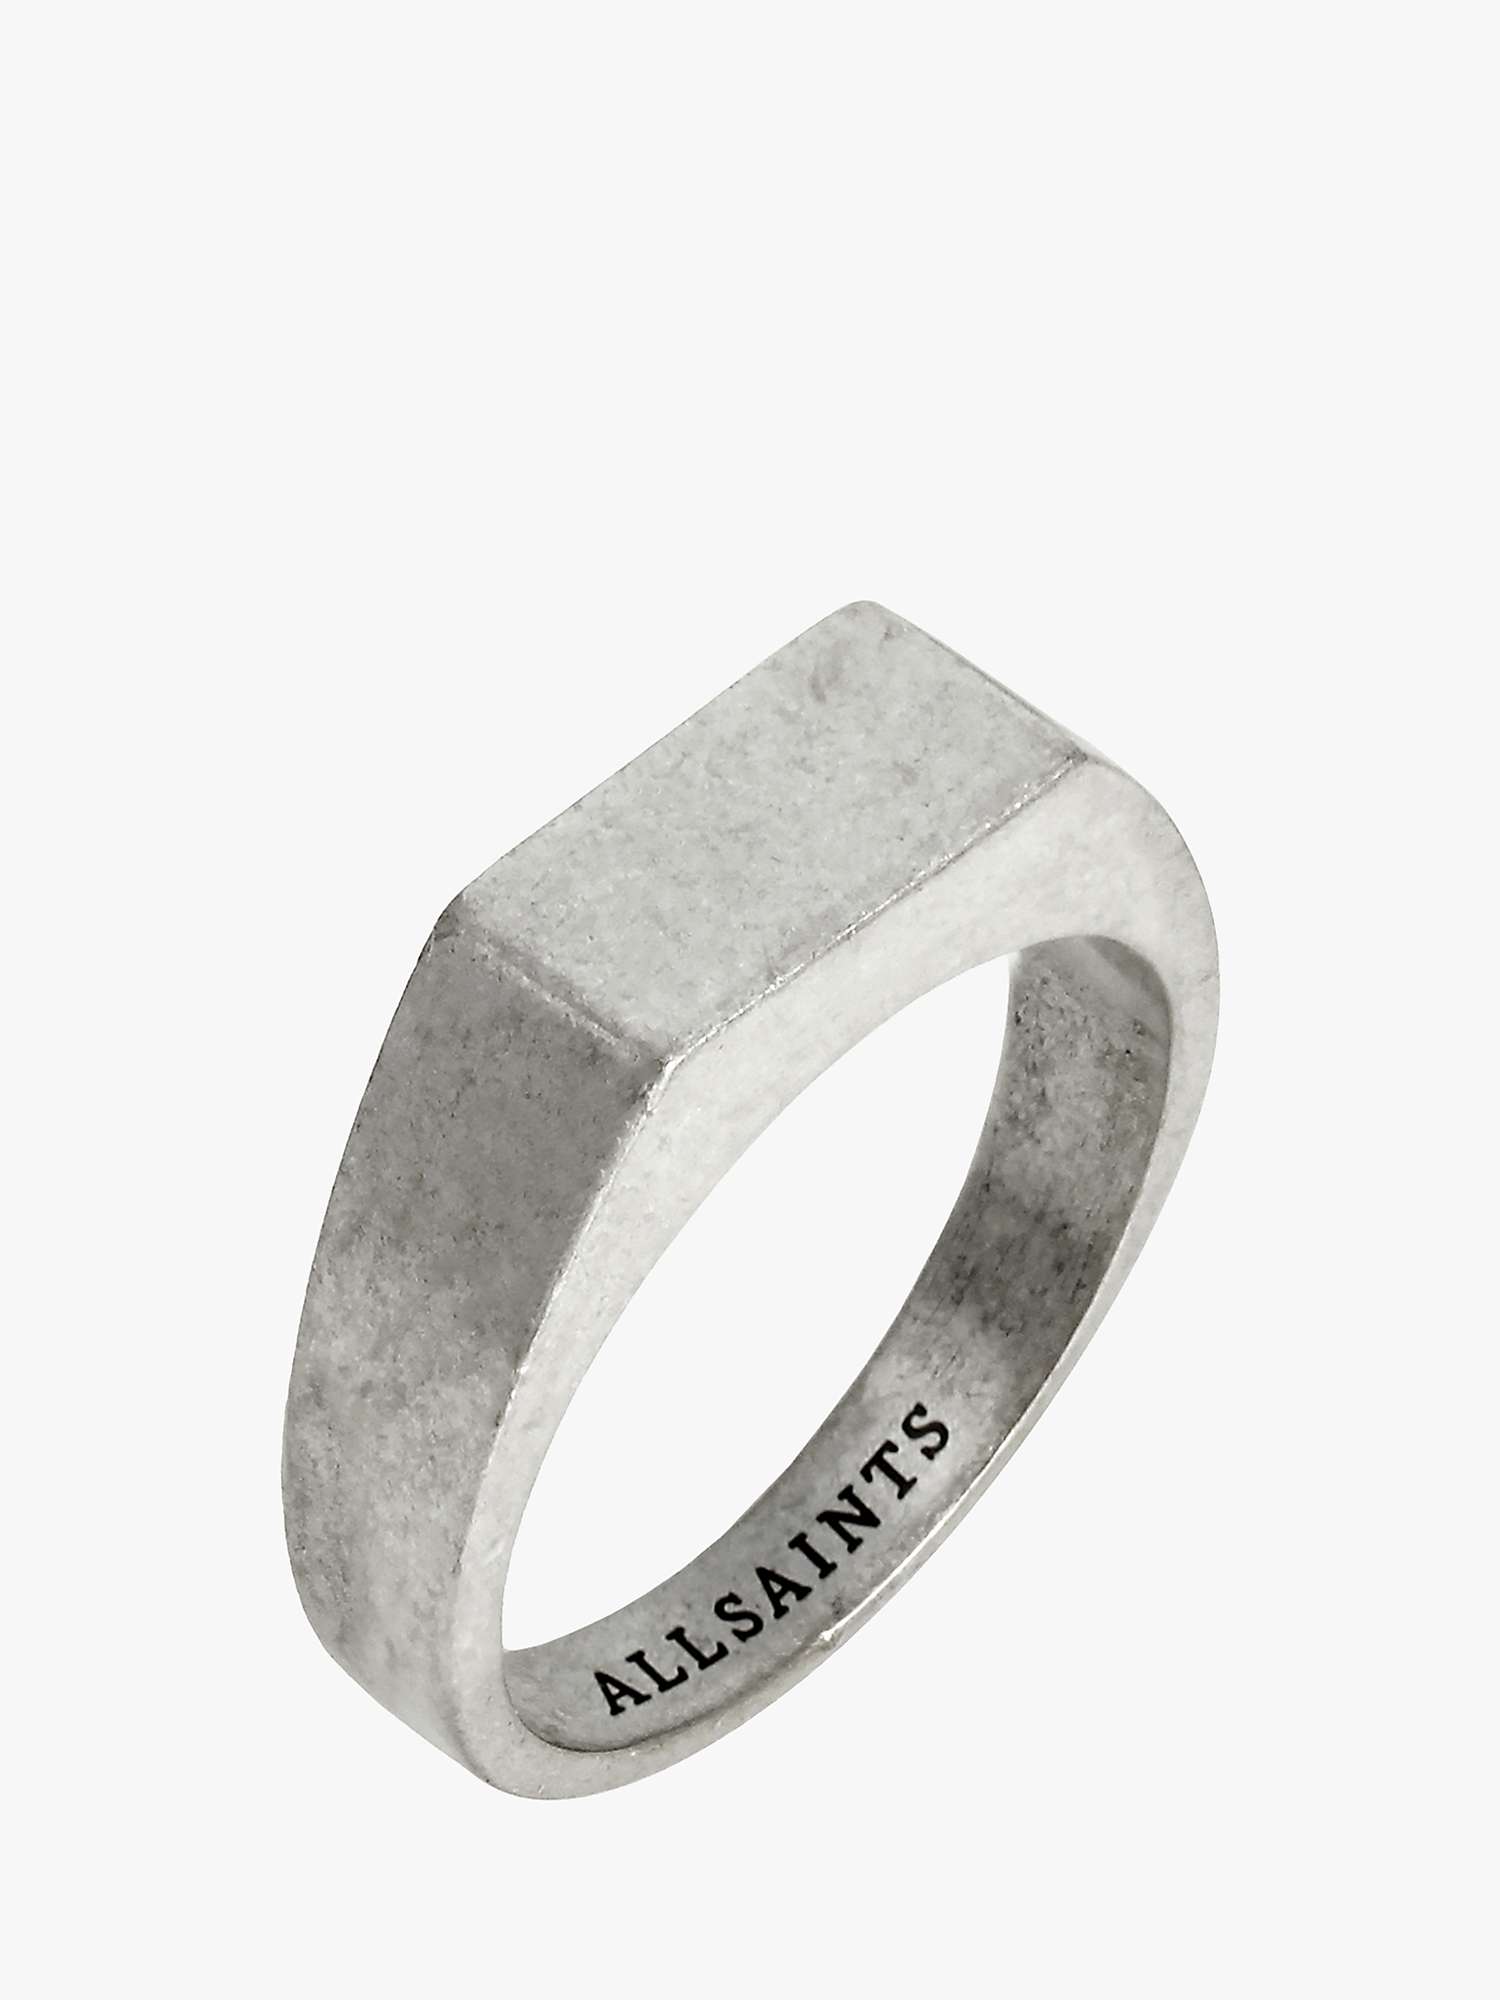 Buy AllSaints Rectangle Signet Ring, Warm Silver Online at johnlewis.com